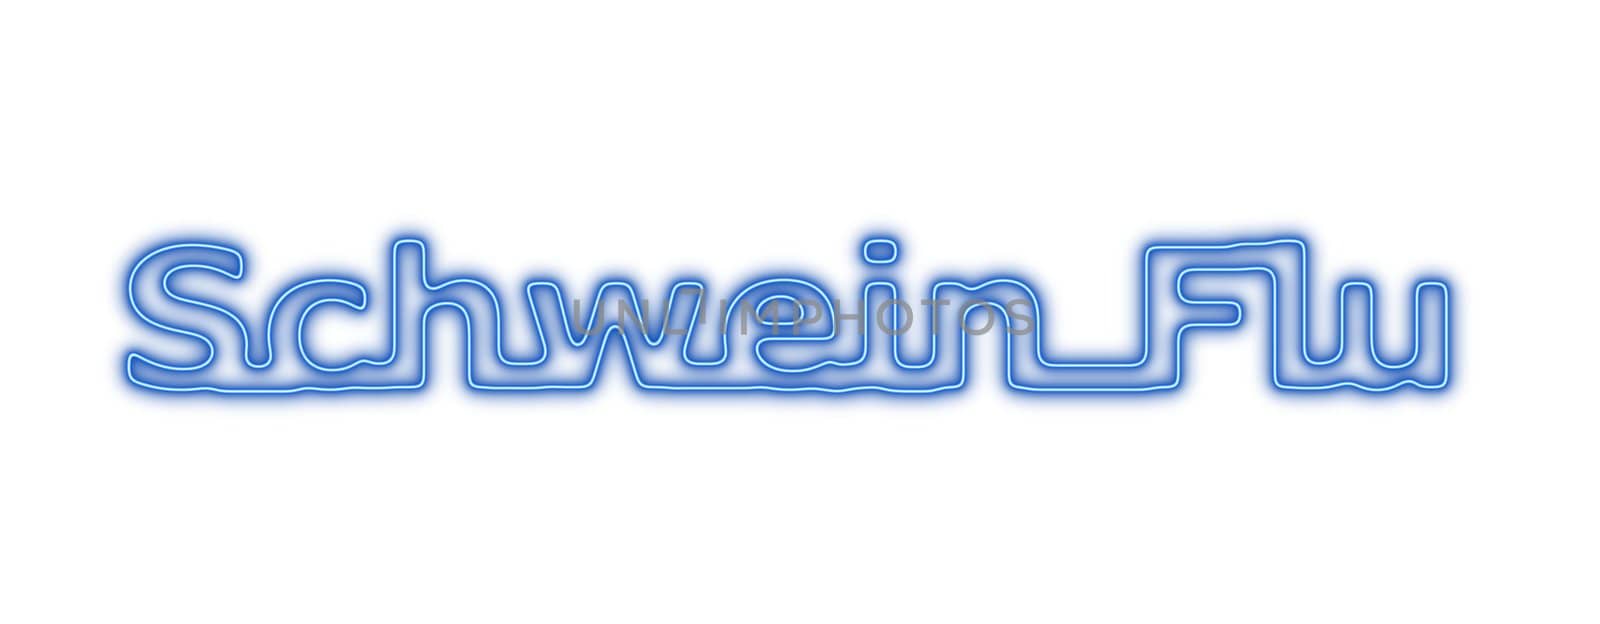 Neon sign about the schwein flu on white background